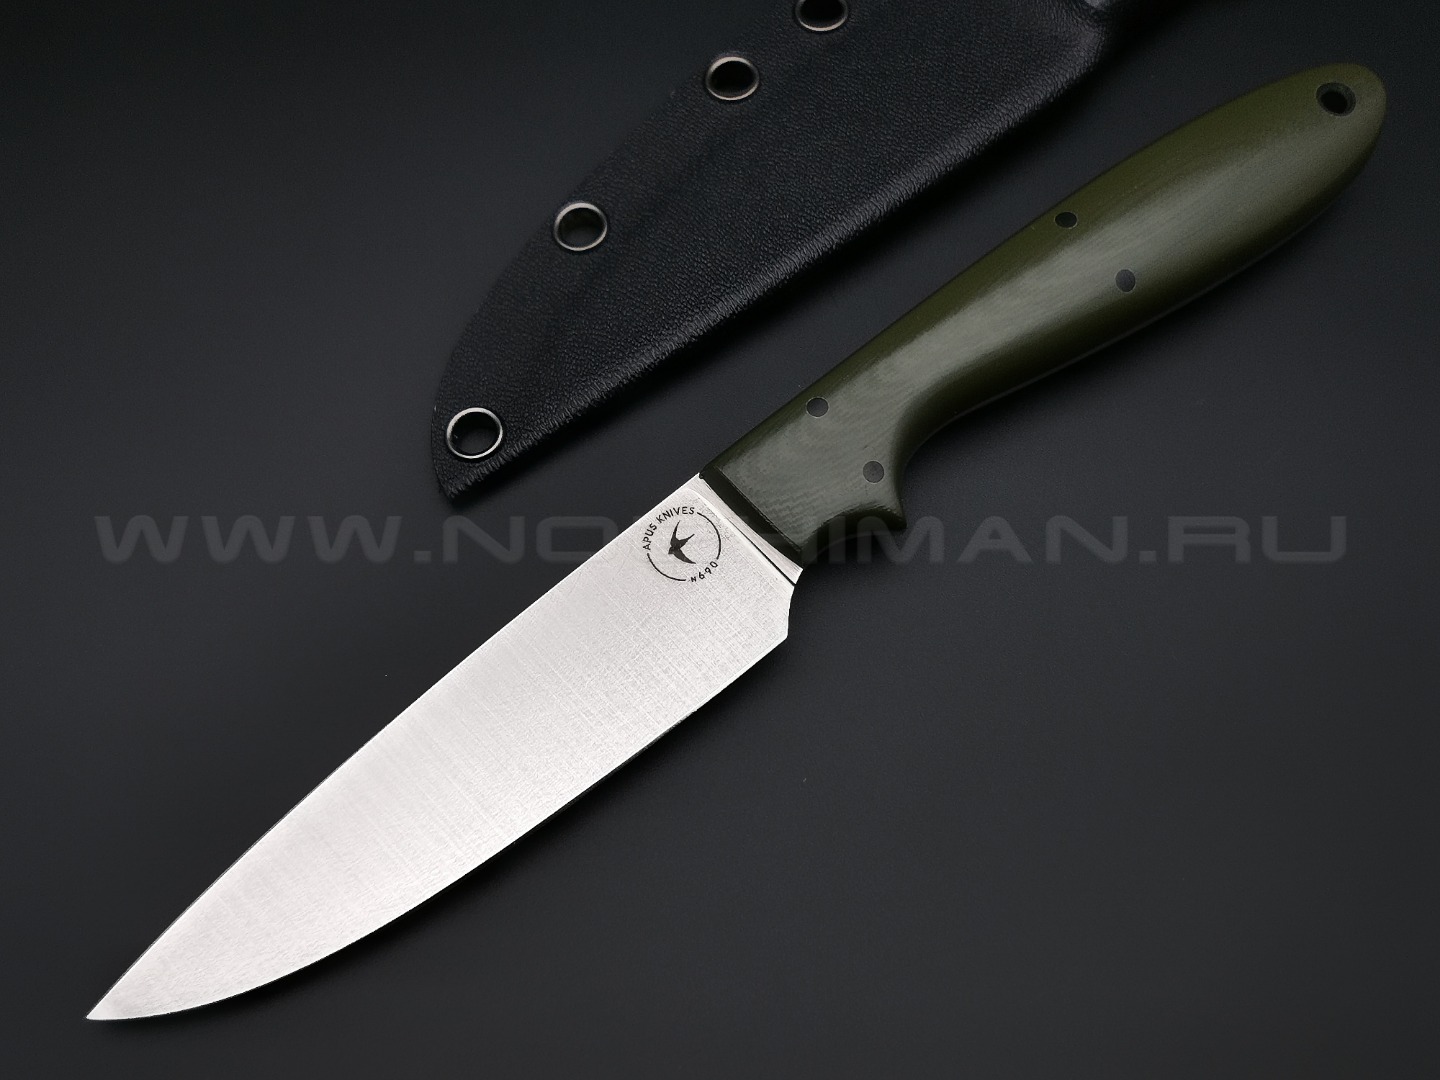 Apus Knives нож Wilson Long сталь N690, рукоять G10 od green